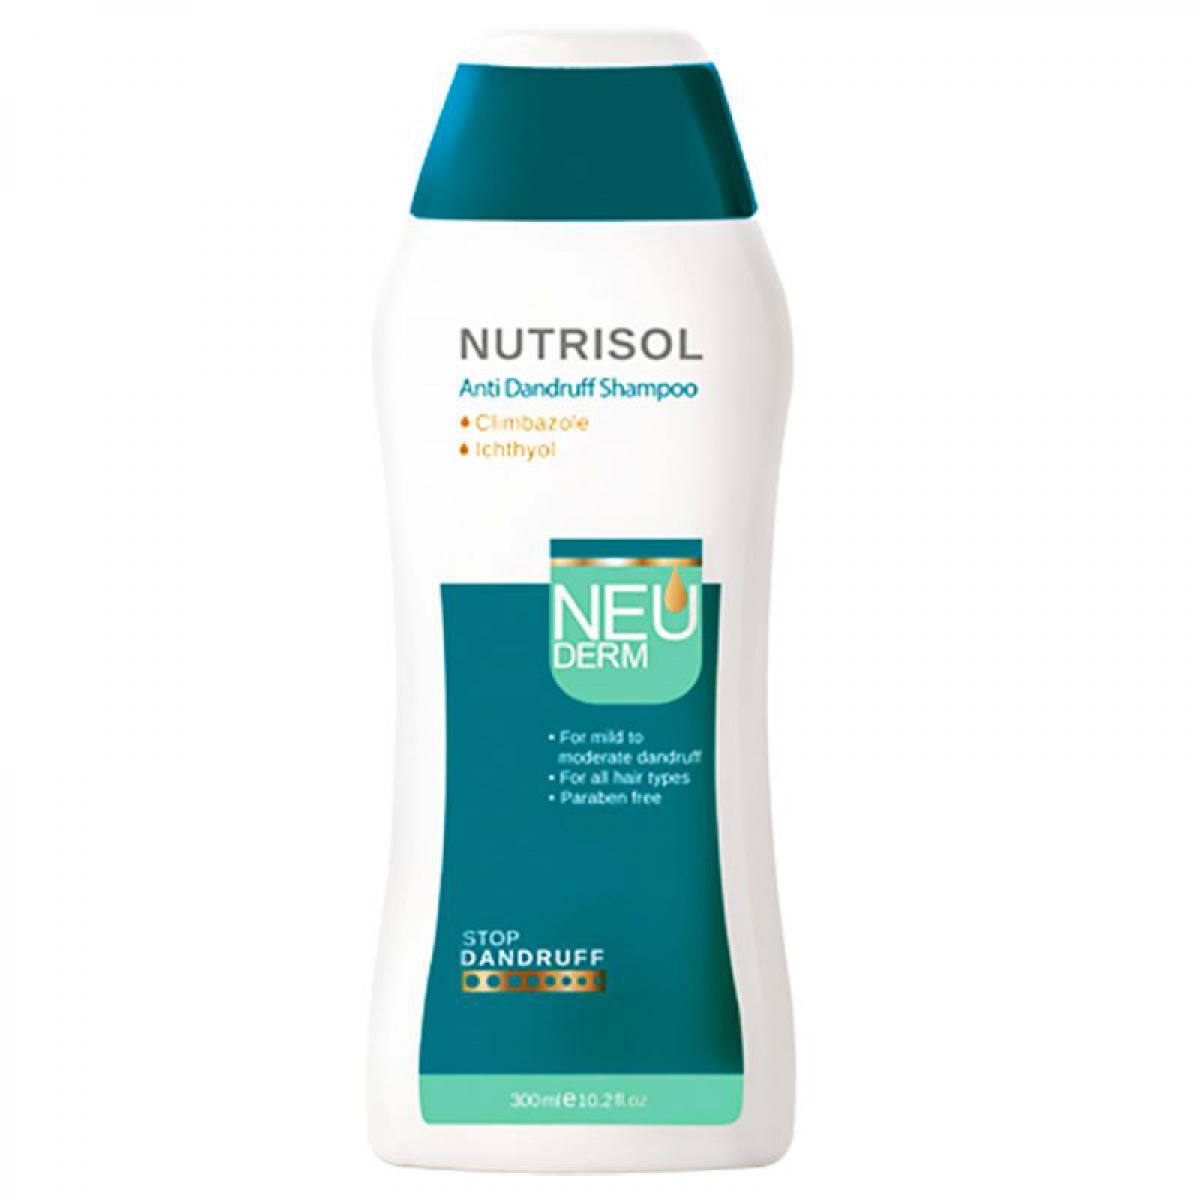 شامپو ضد شوره مدل Nutrisol مناسب انواع مو 300 میل - Neuderm Nutrisol Anti Dandruff Shampoo For All Hairs 300ml